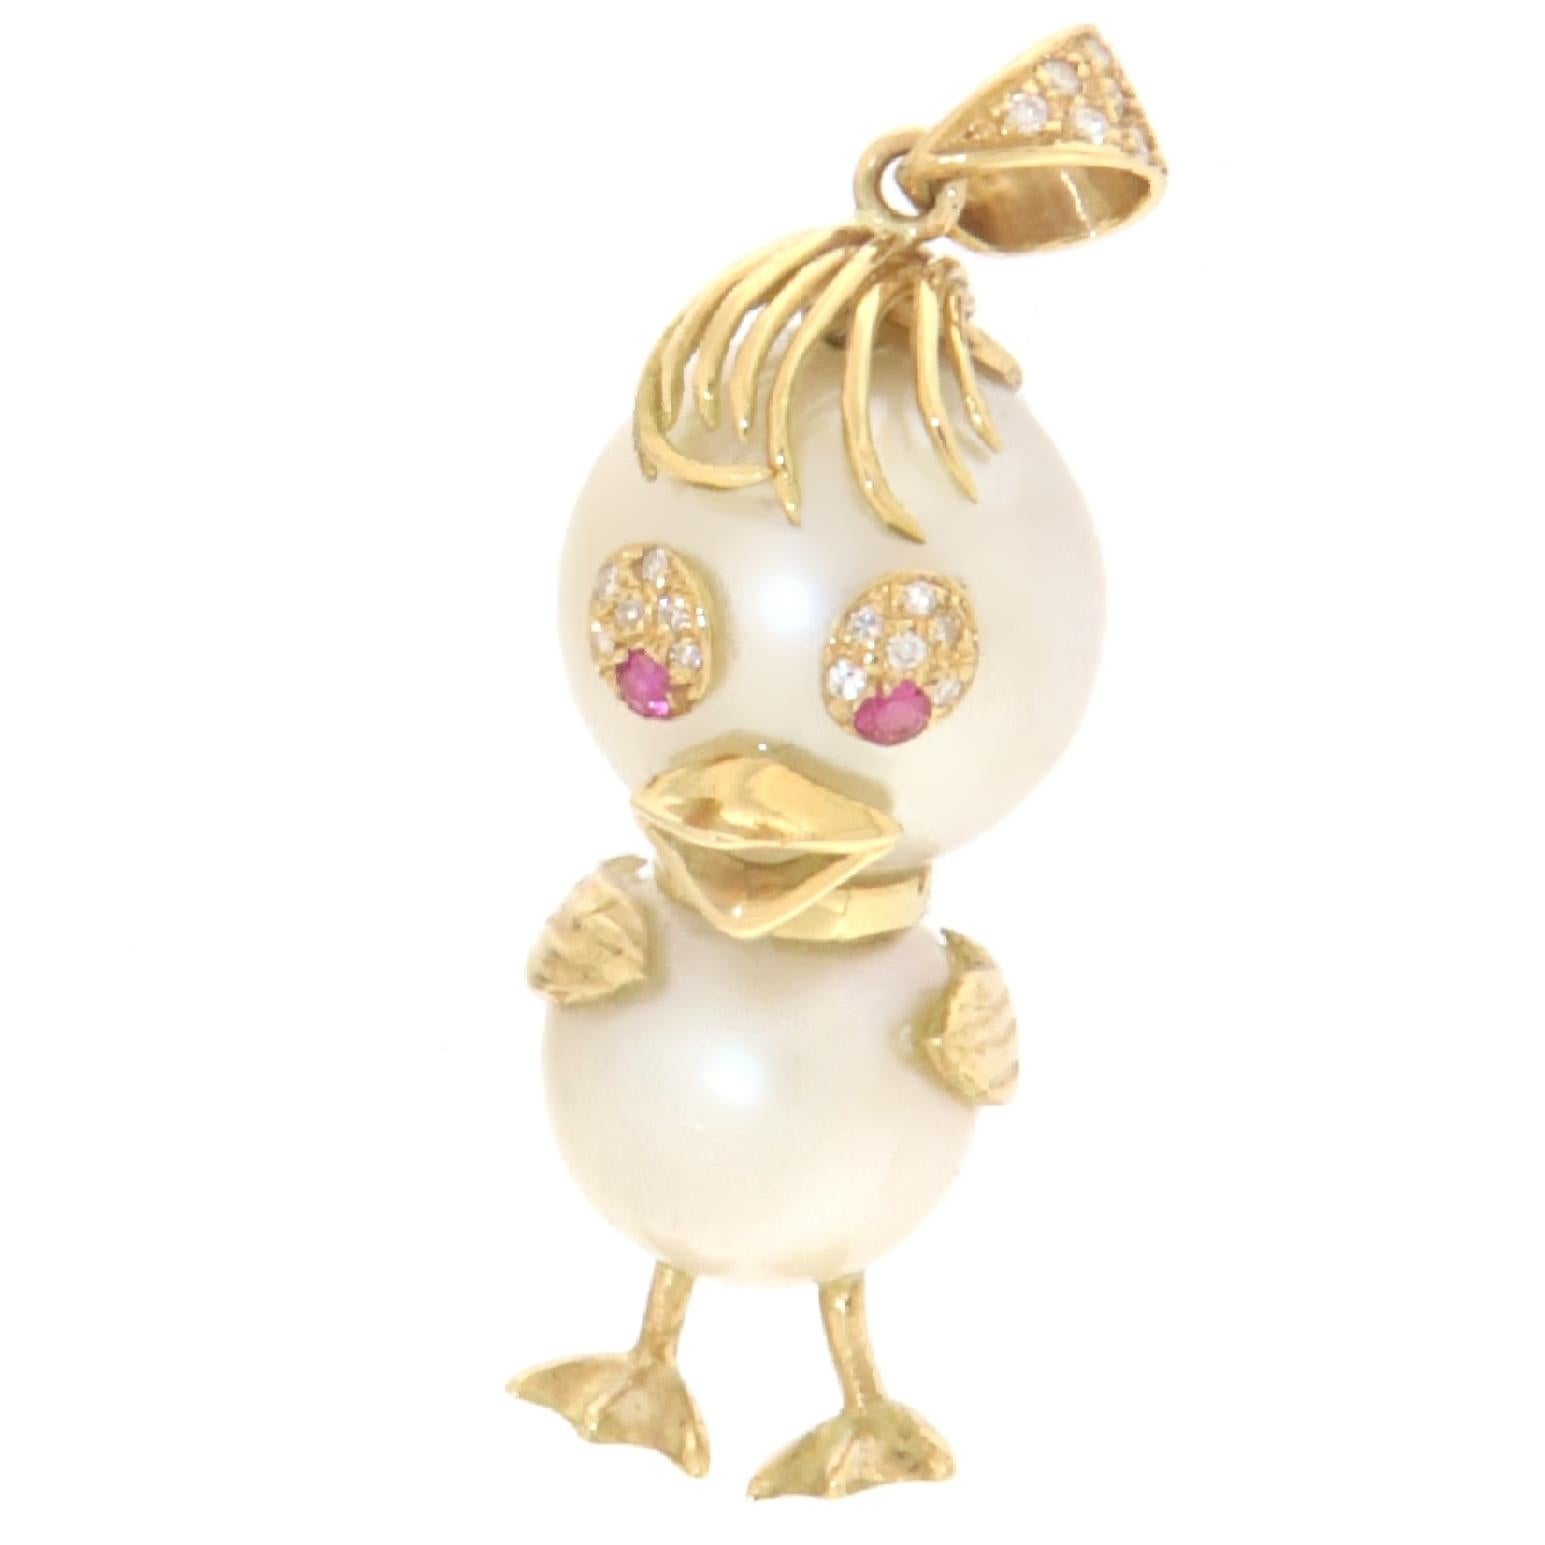 Brilliant Cut Duck Pearls Diamonds Rubies 18 Karat Yellow Gold Pendant Necklace For Sale